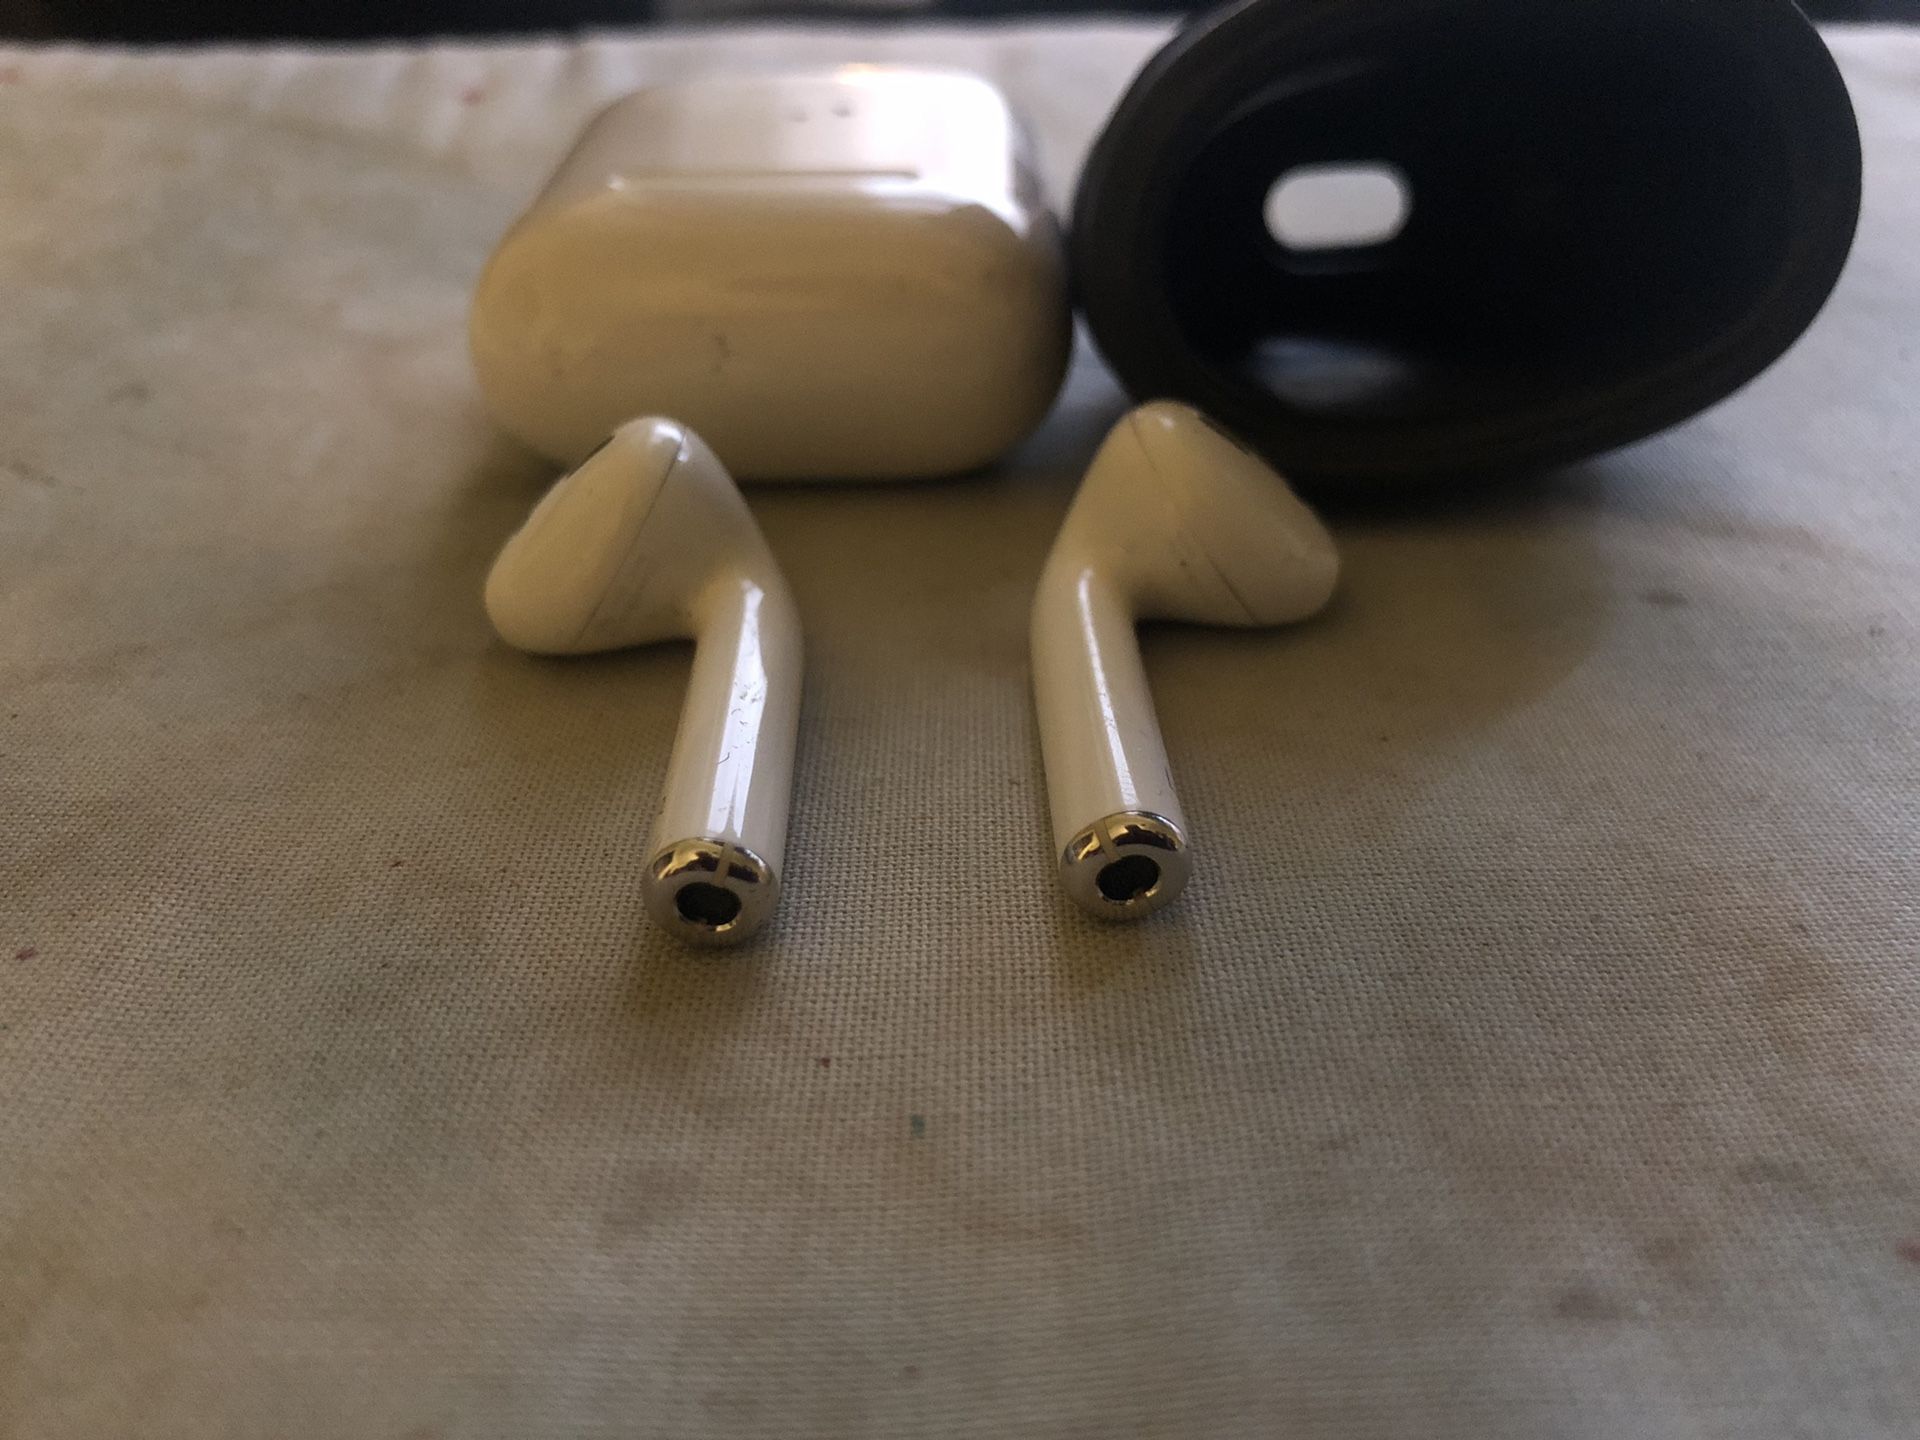 Apple EarPods 1st generation with case